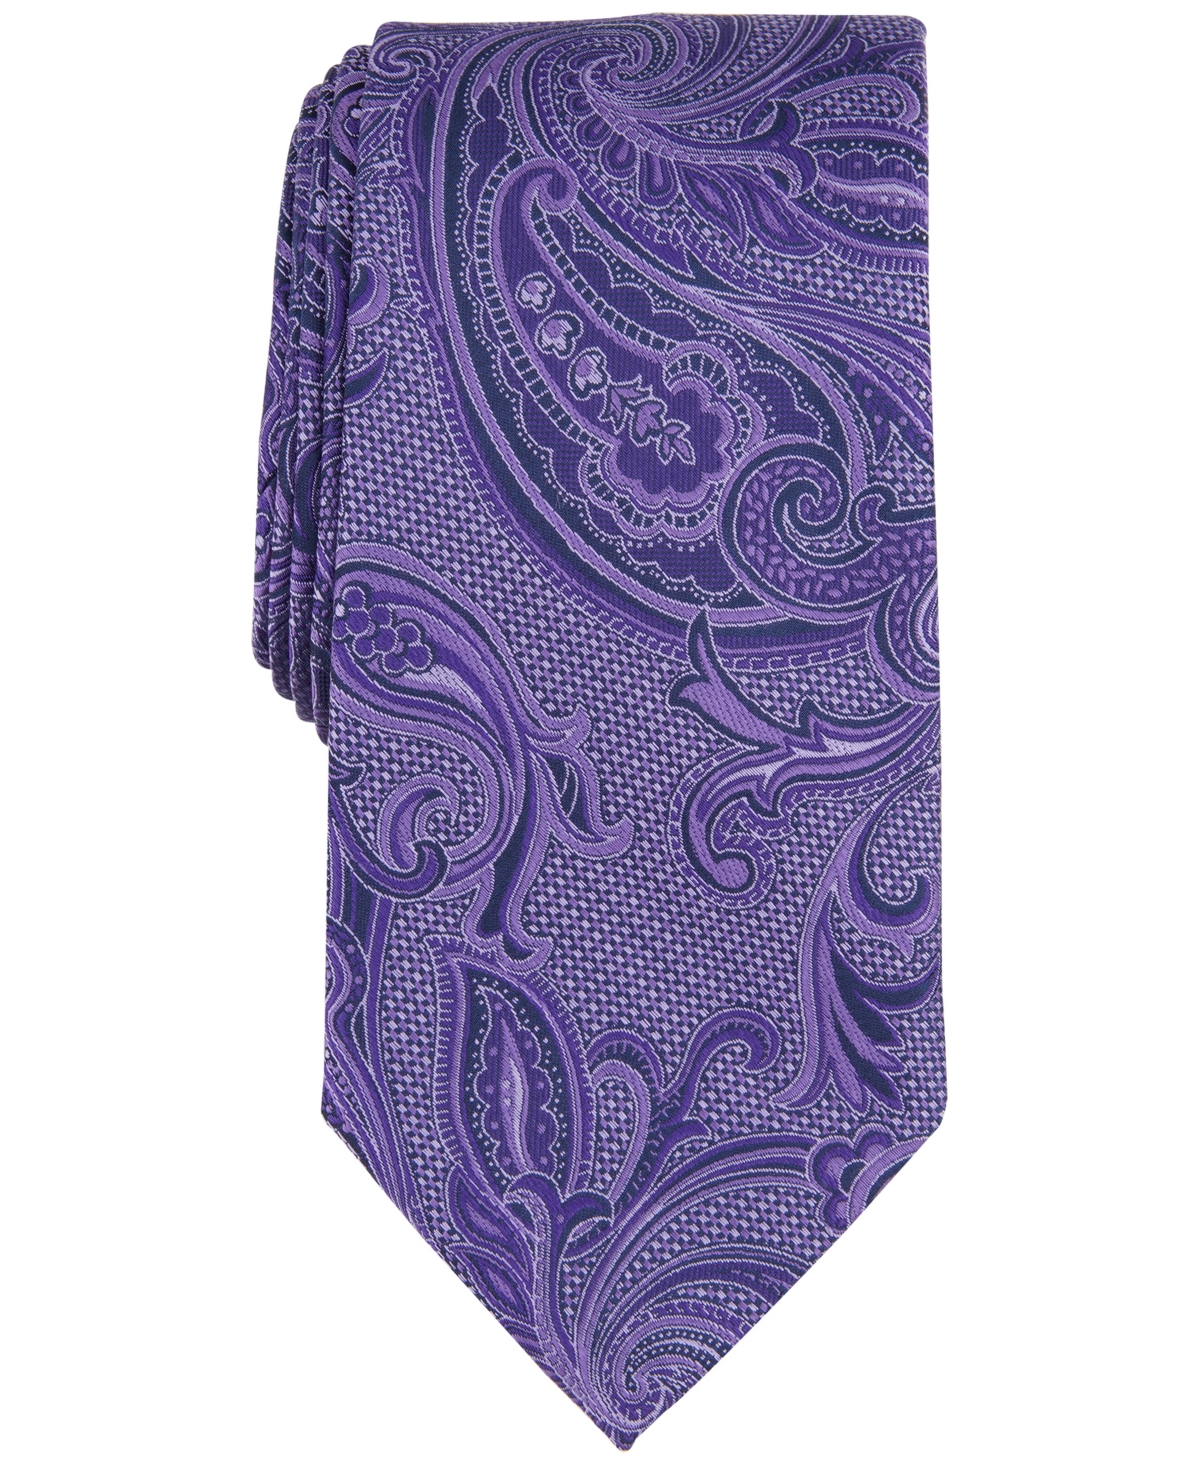 Michael Kors Men's Marbella Paisley Tie In Purple